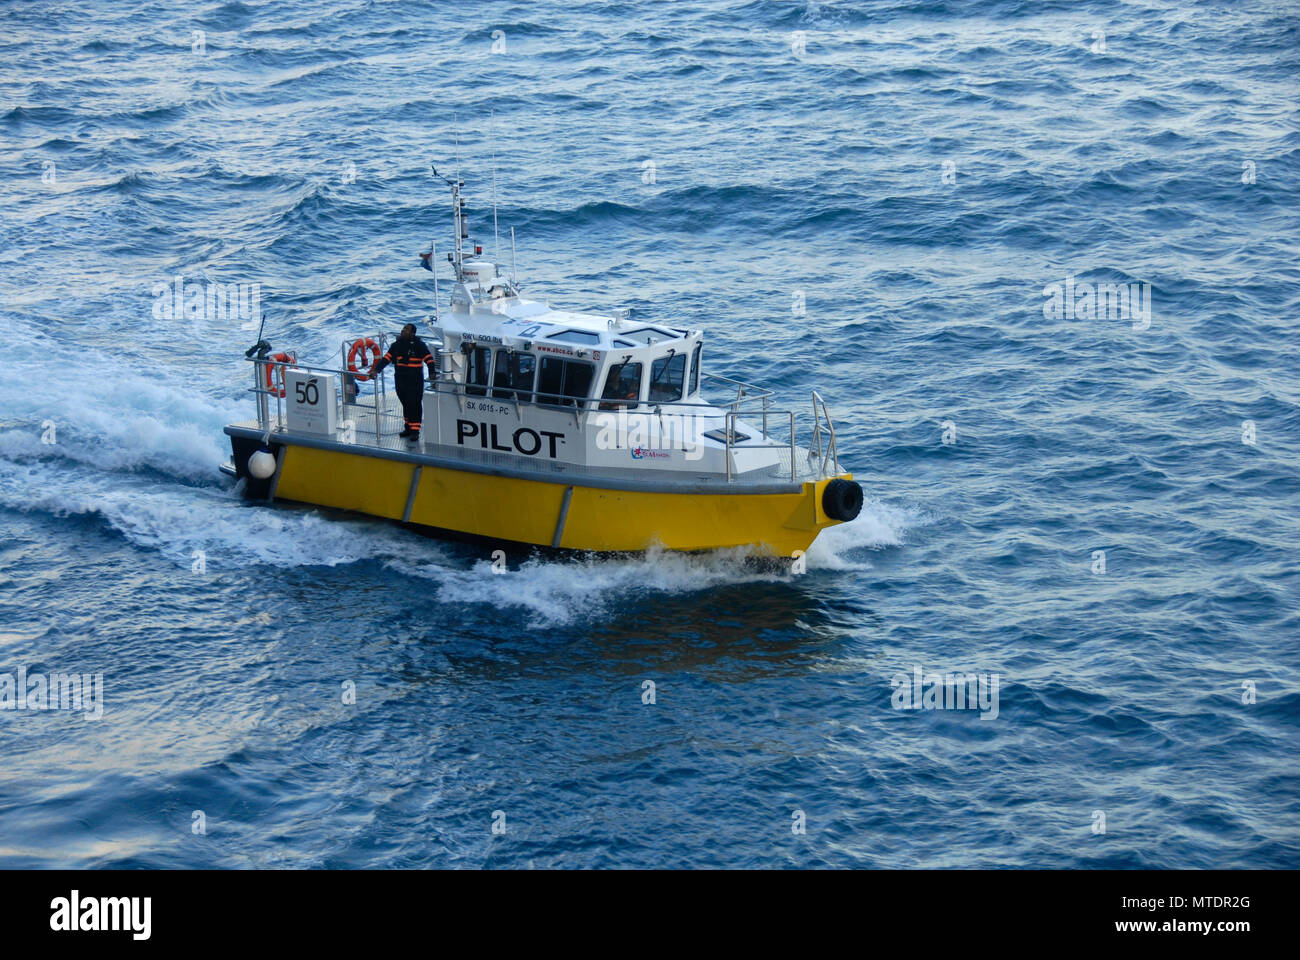 Pilot boat, St Maarten, Caribbean Stock Photo